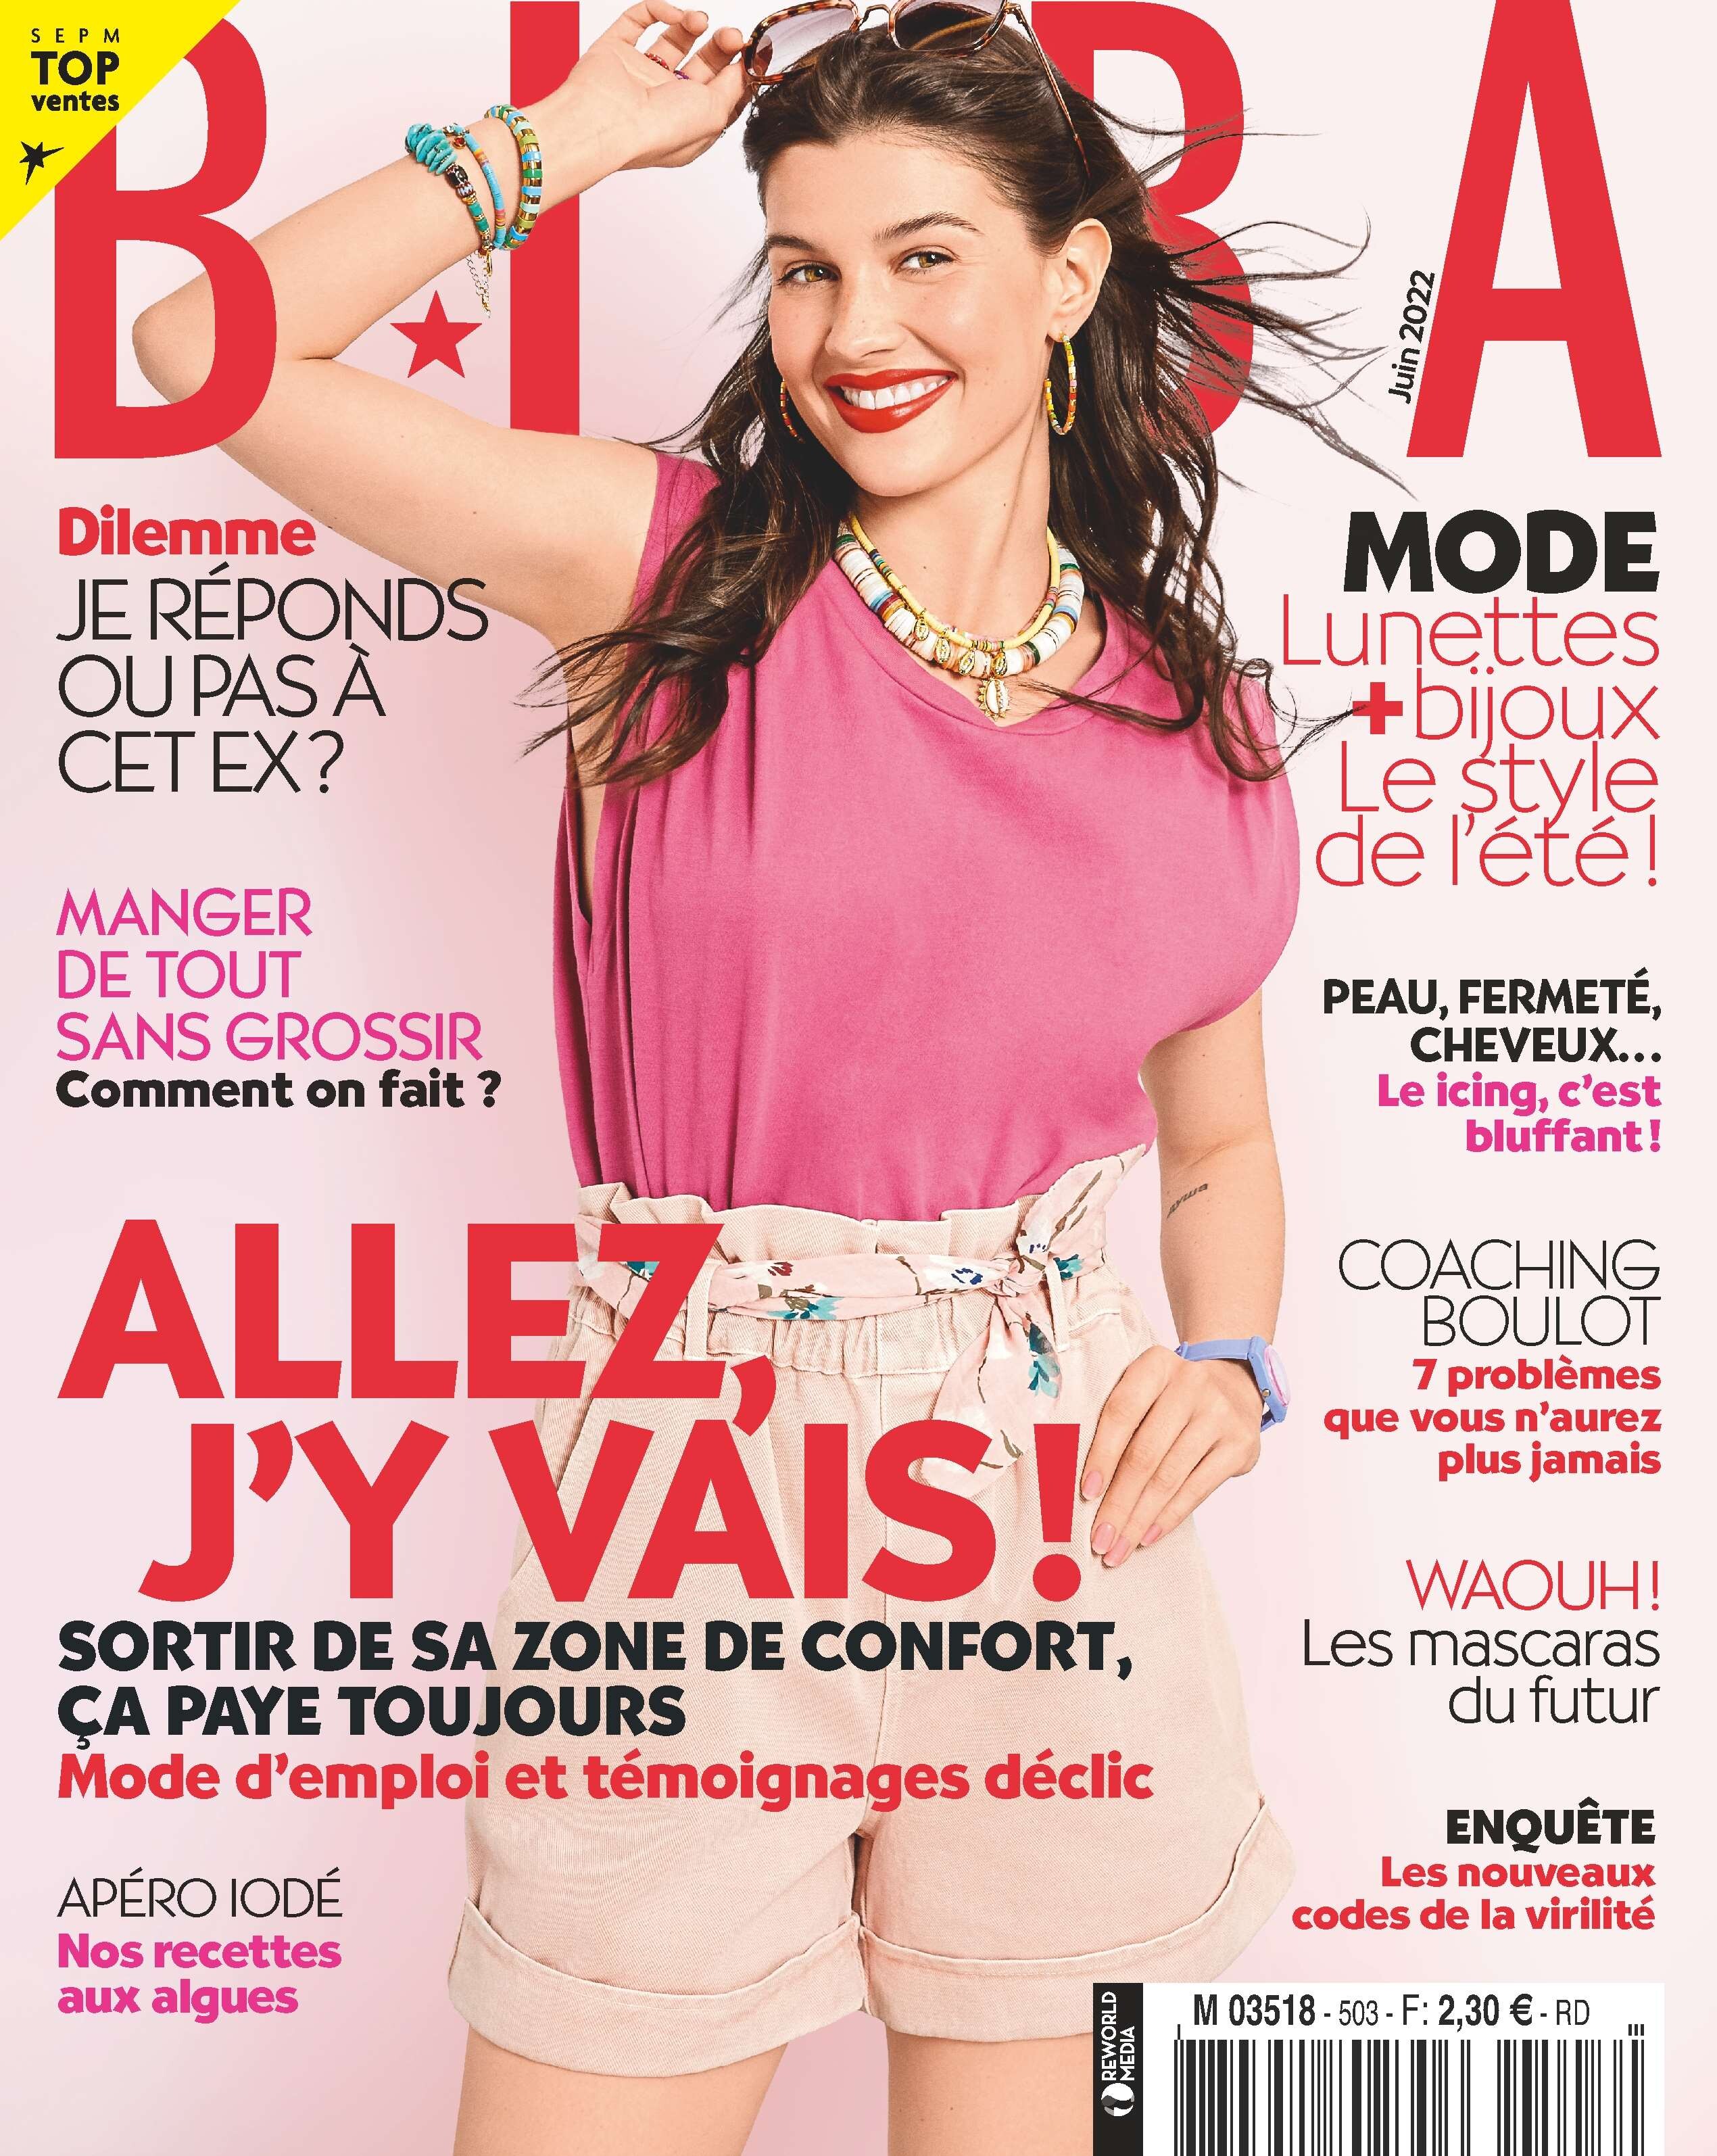 Biba magazine models - Page 15 - General Discussion - Bellazon